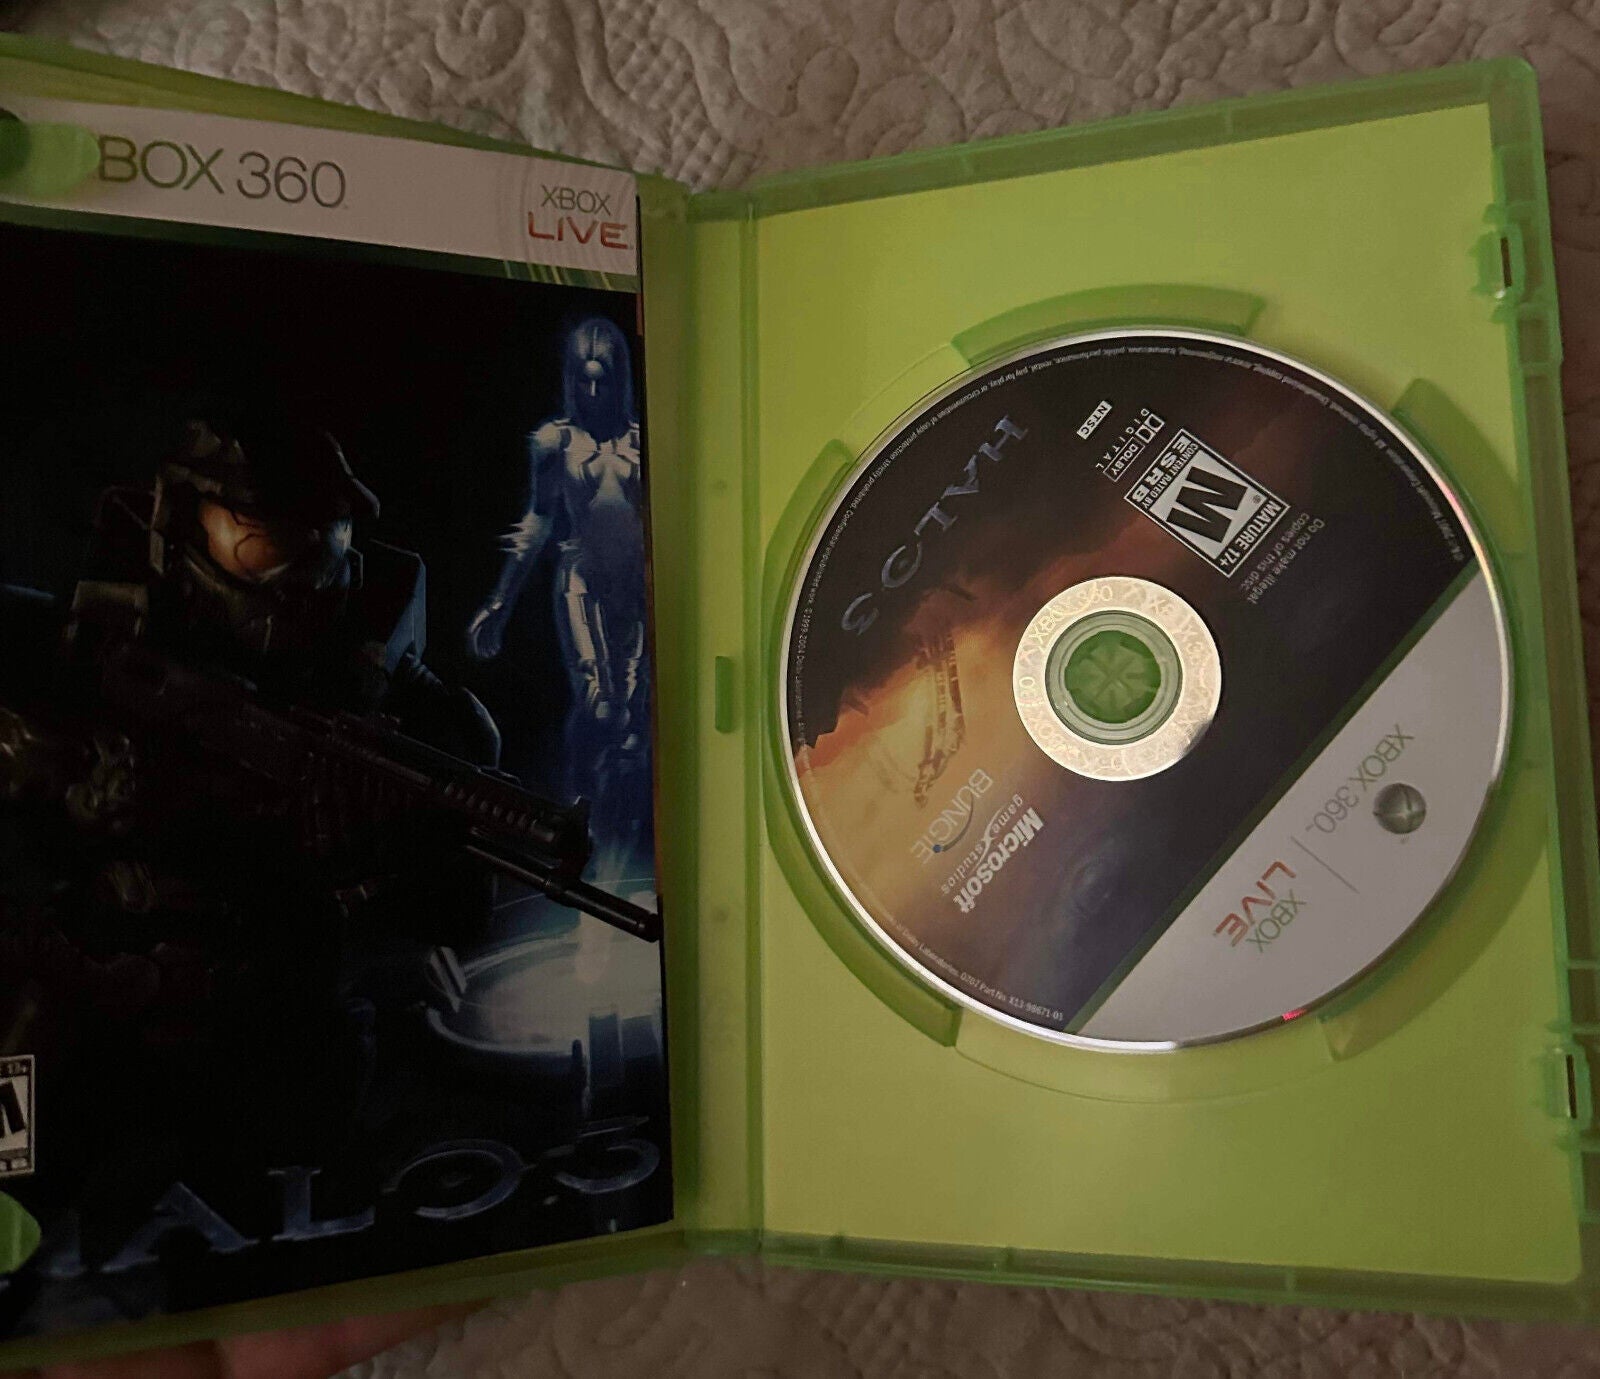 Halo 3 Microsoft Xbox 360 - Tested & Working